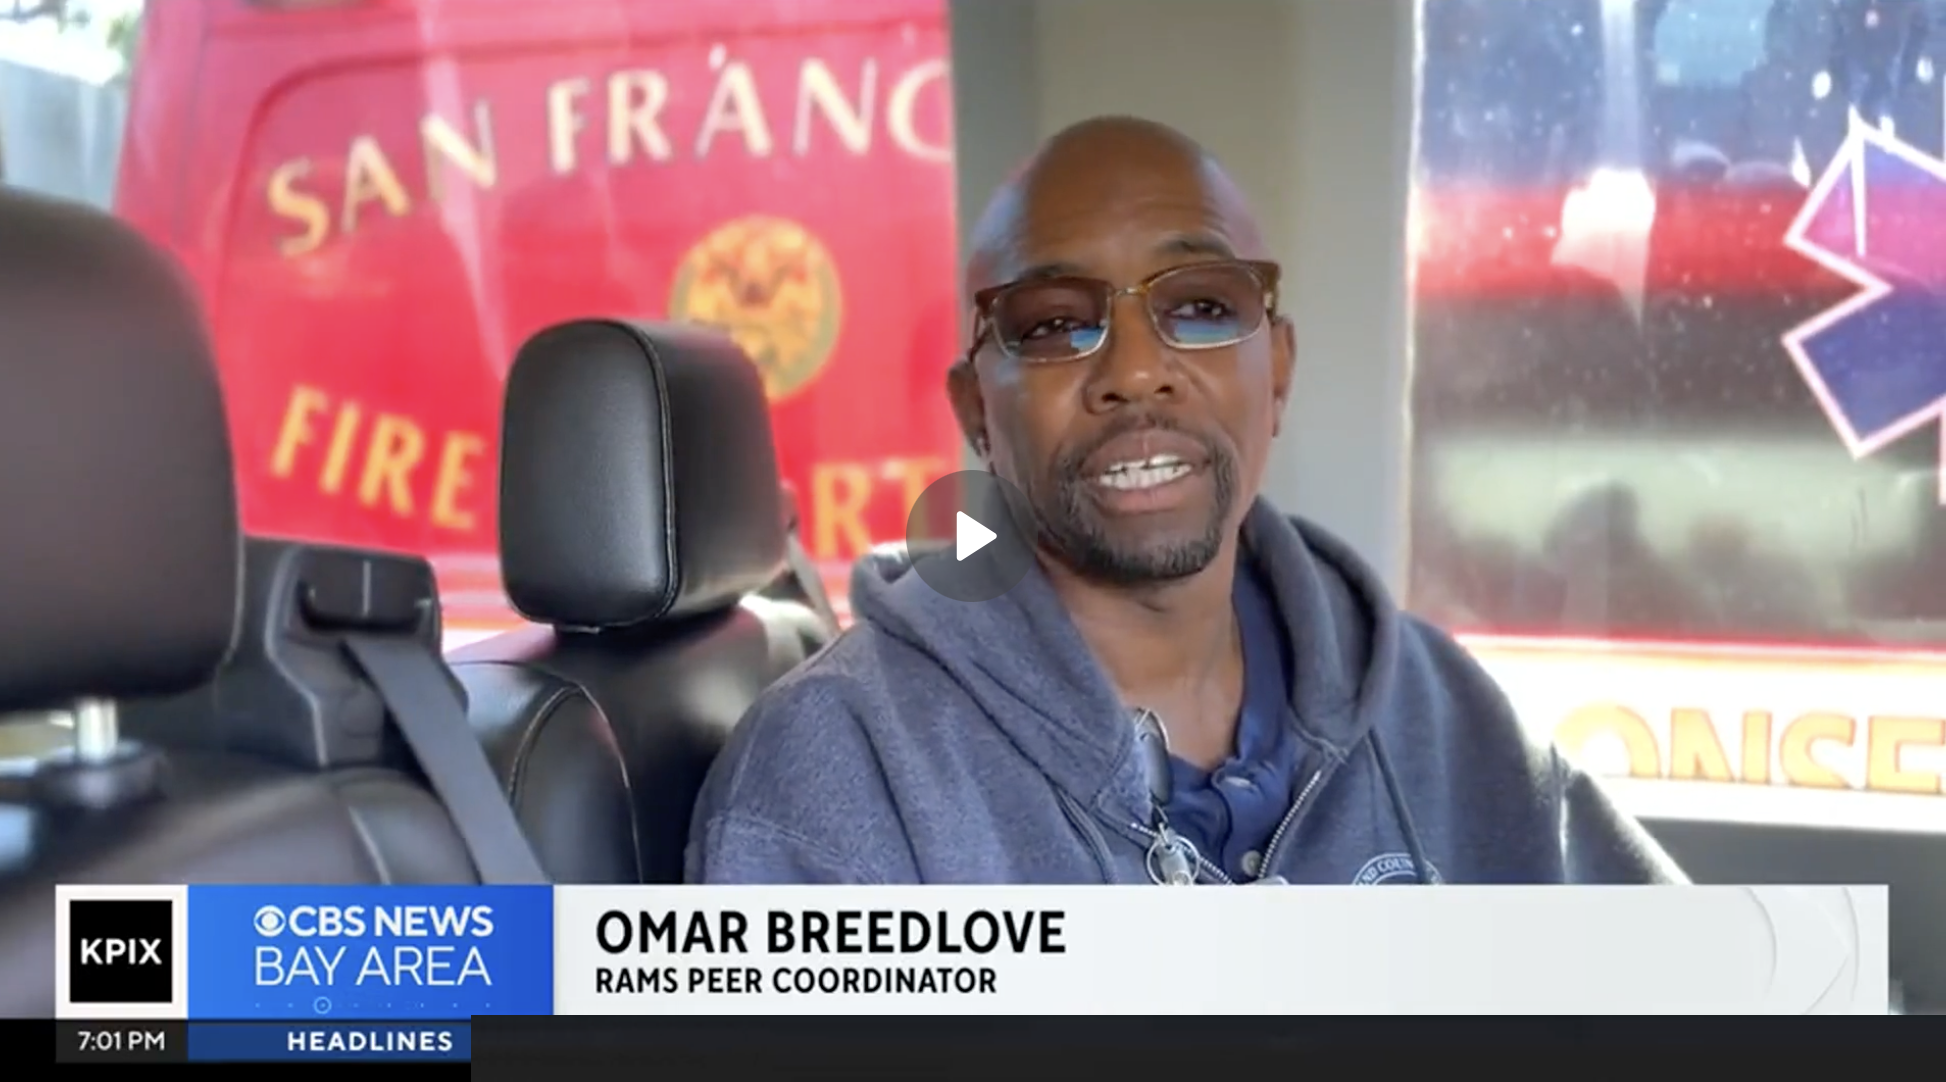 Omar Breedlove appearing on CBS News Bay Area